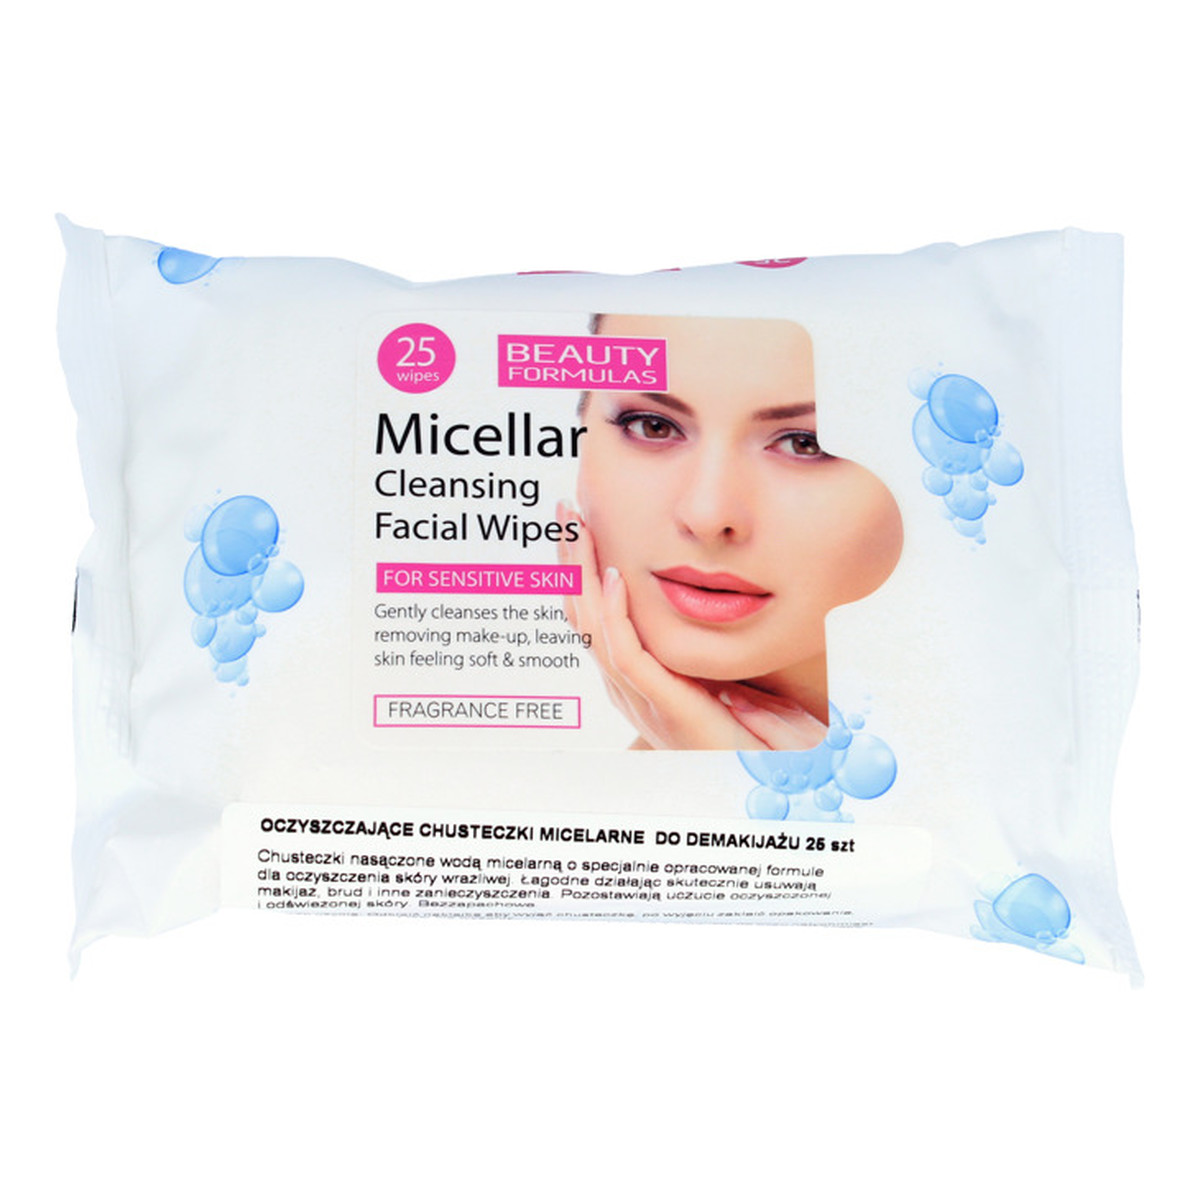 Beauty Formulas Micellar Cleansing chusteczki micelarne do demakijażu 25 szt.